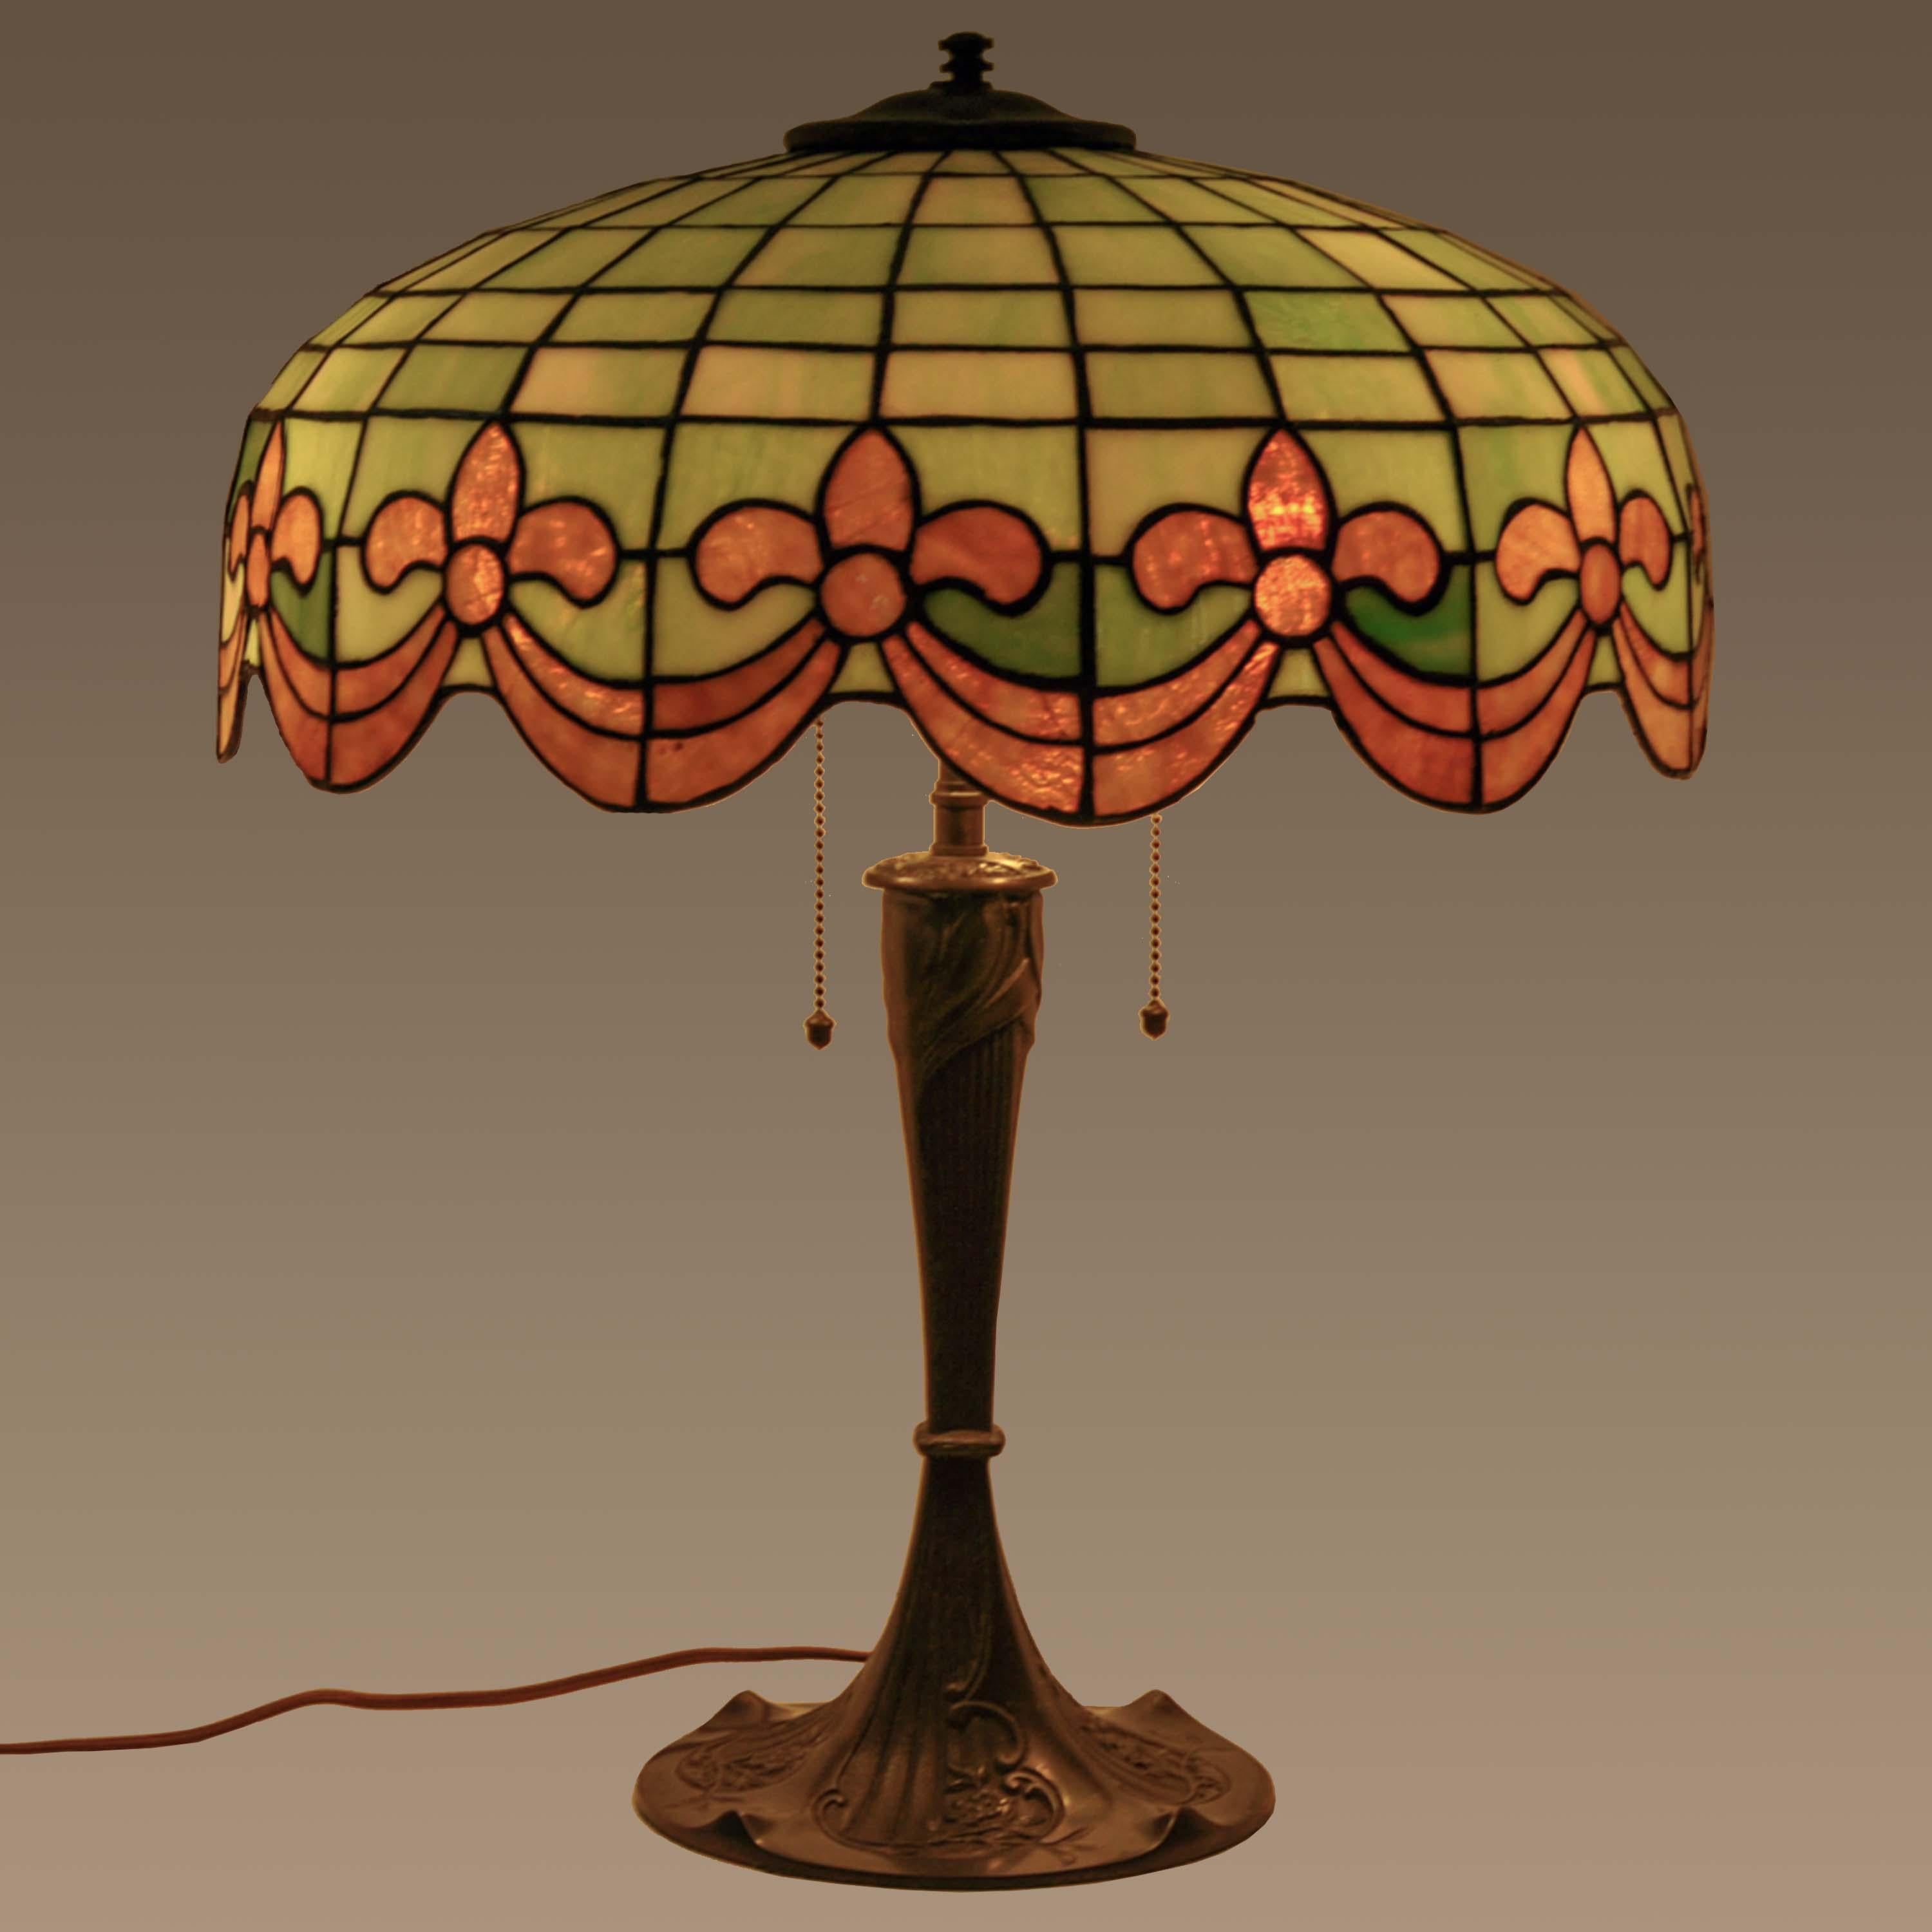 Antique American Art Nouveau Bronze & Leaded Glass Table Lamp by Wilkinson, 1910 For Sale 7